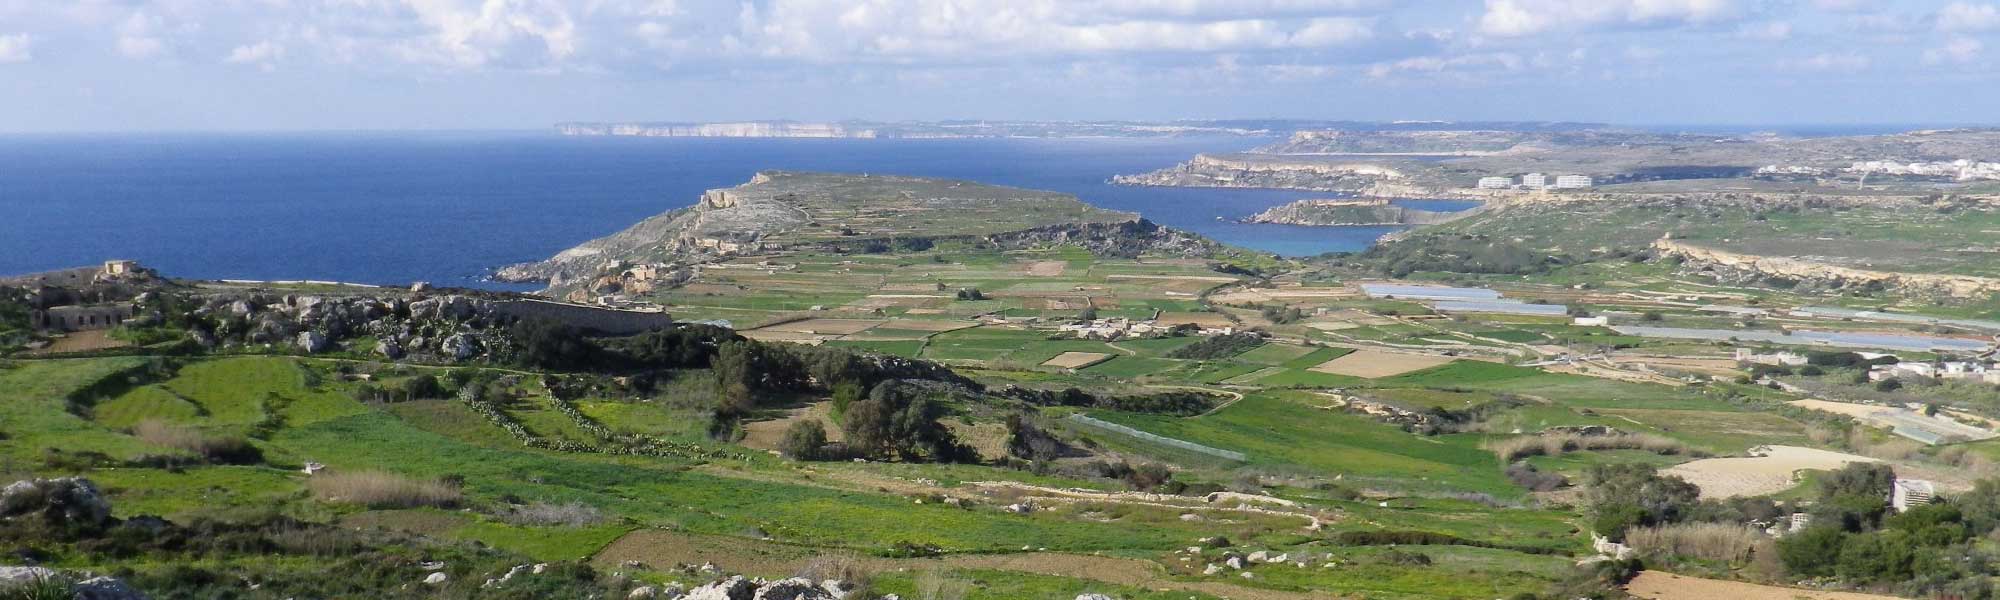 Maltese landscape of Kuncizzjoni Rabat Malta